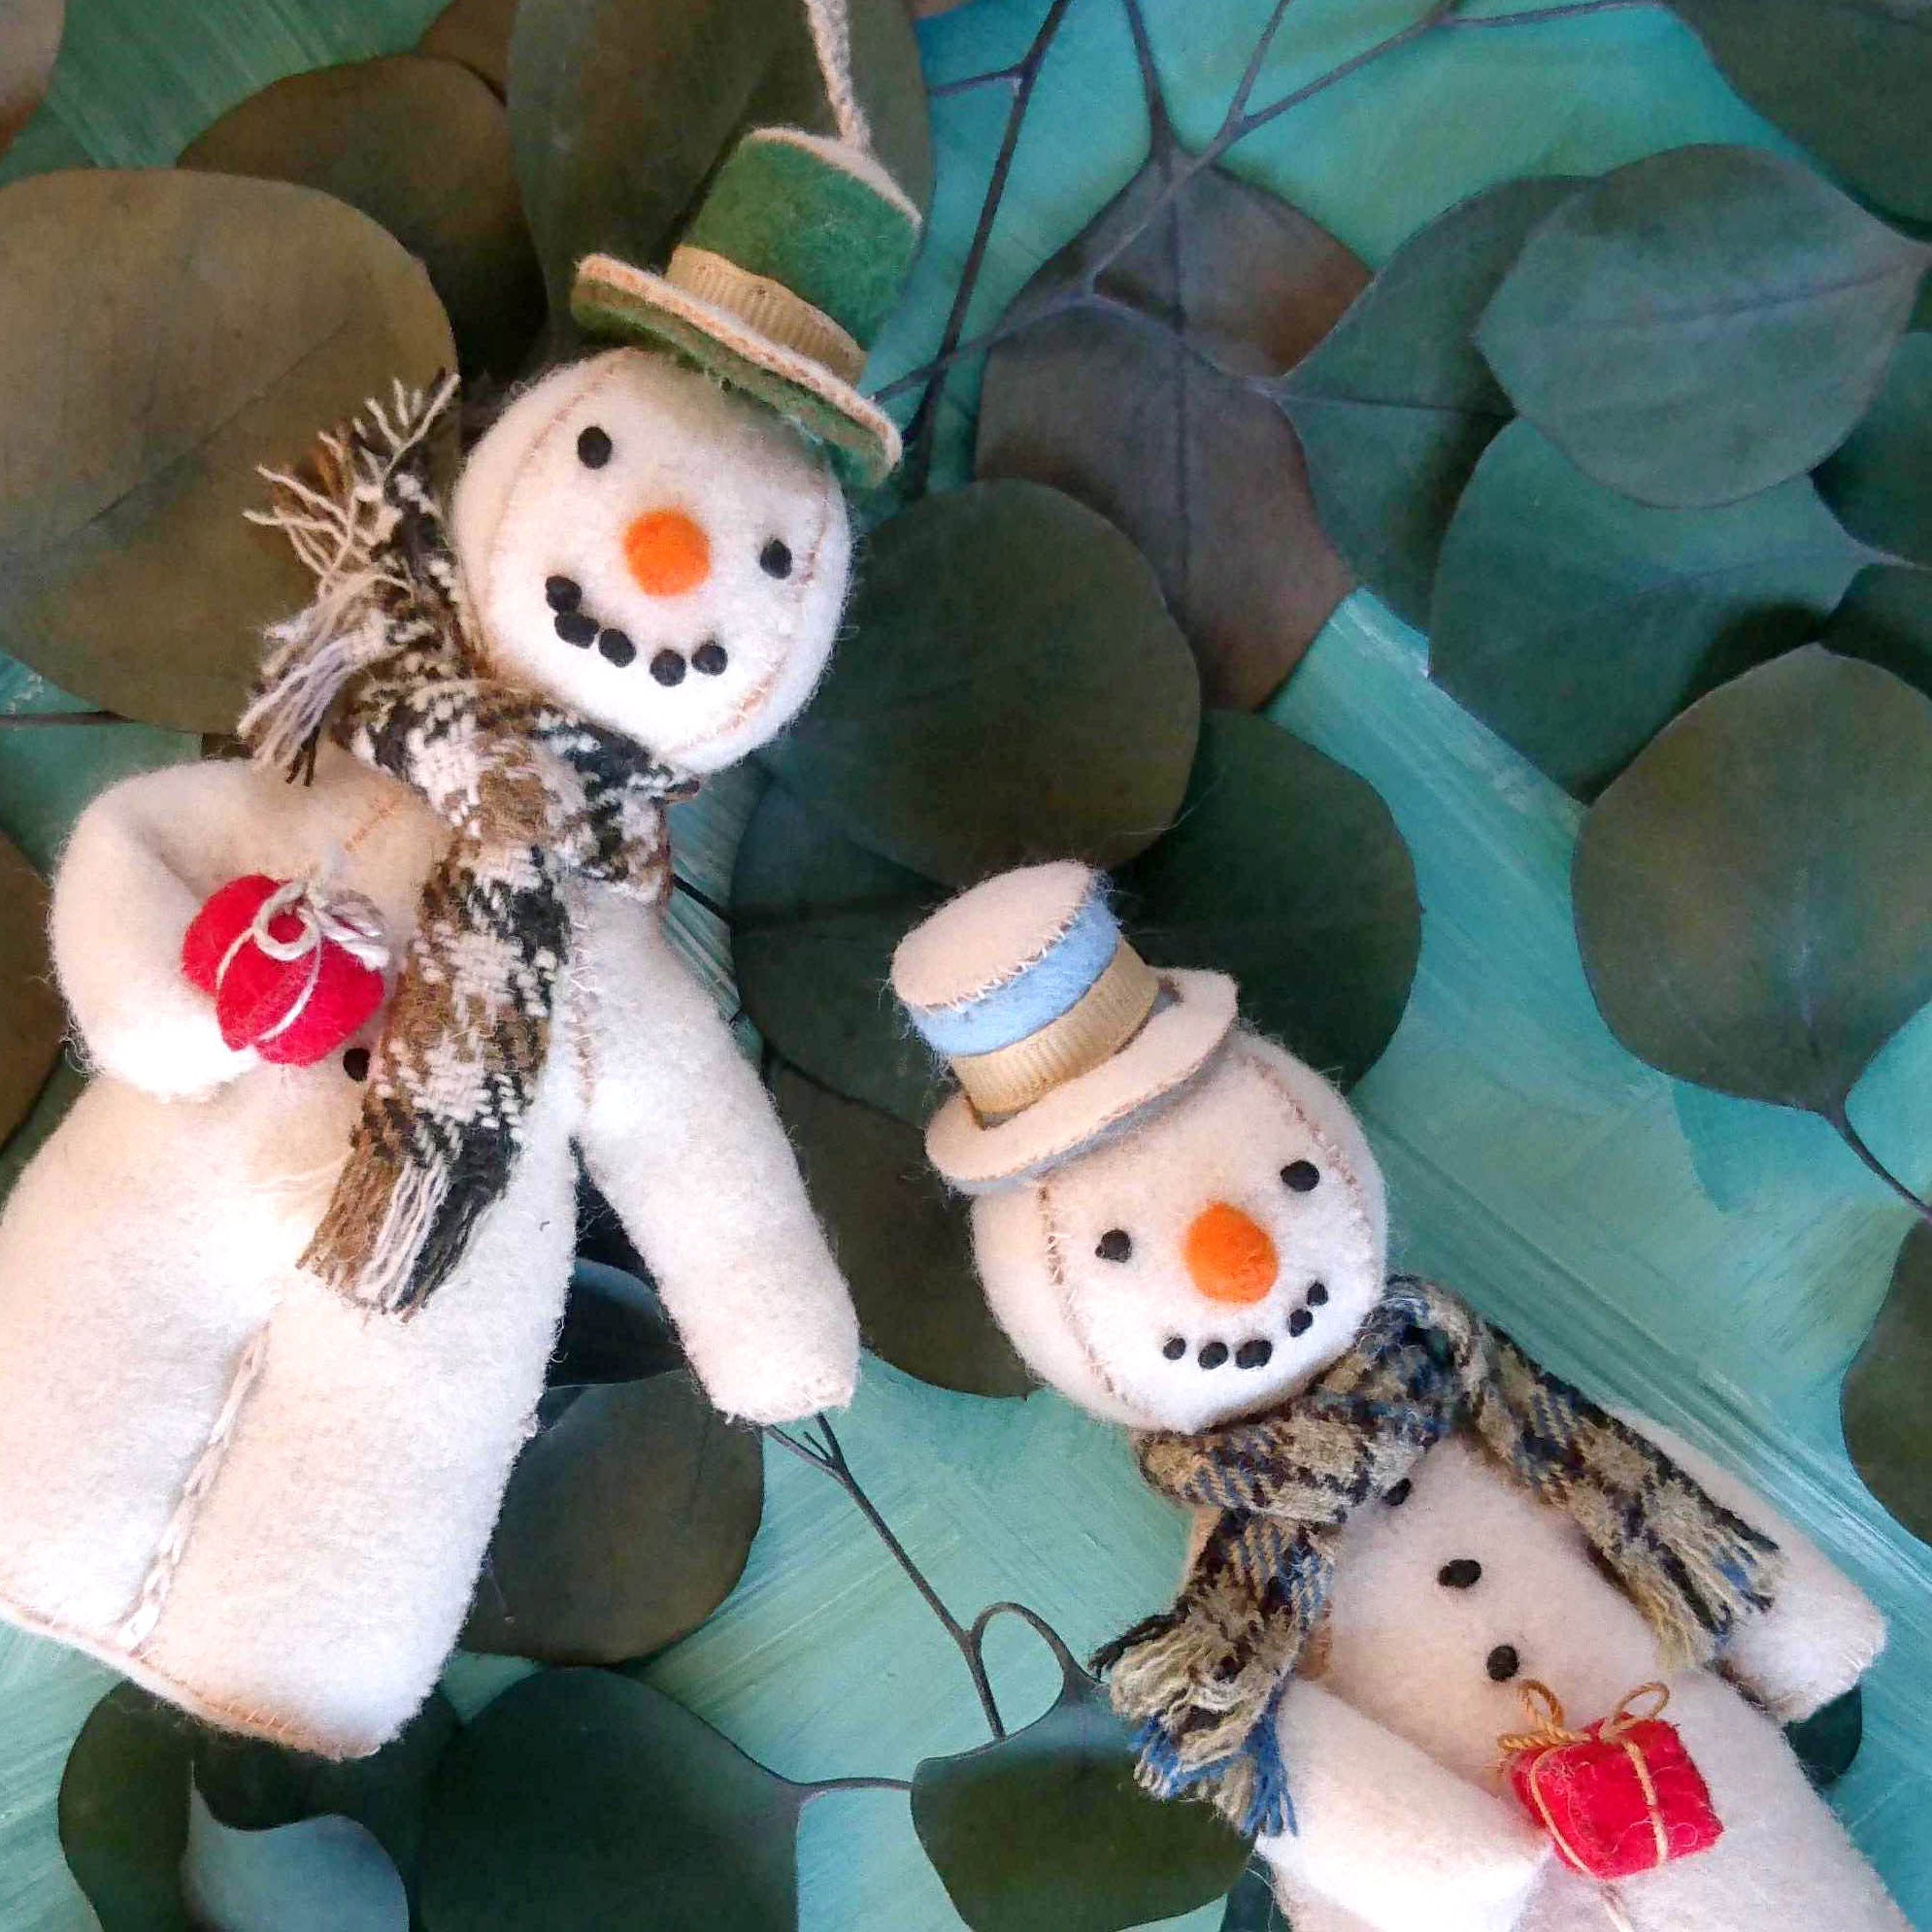 Fine-Cell-Work-Handmade-Charity-Christmas-Decorations-Snowman-with-Scarf_43097da0-0ae1-446b-bdd5-0191bf2fecd7.jpg